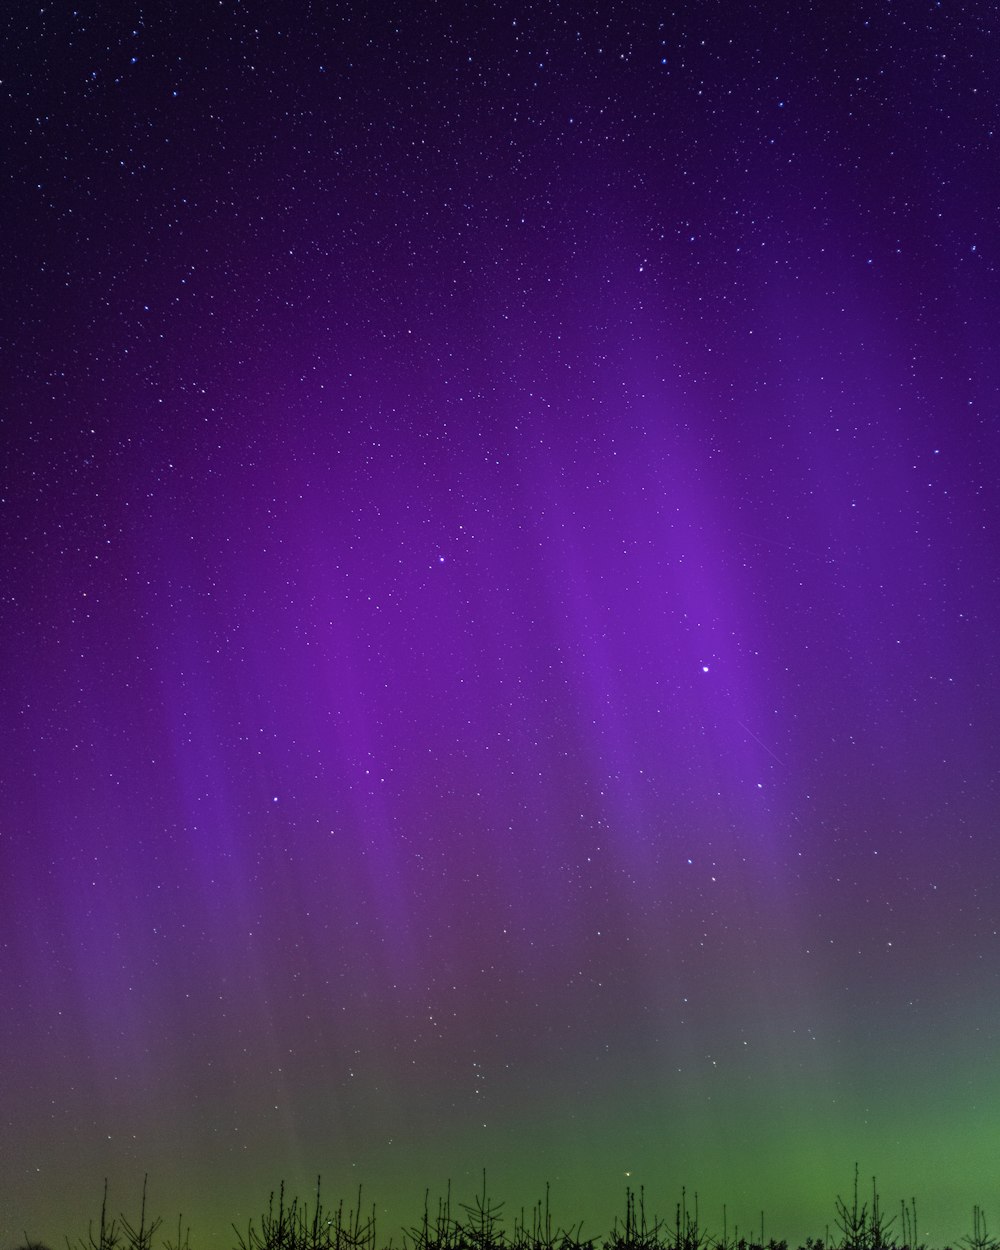 a purple and green aurora bore in the night sky